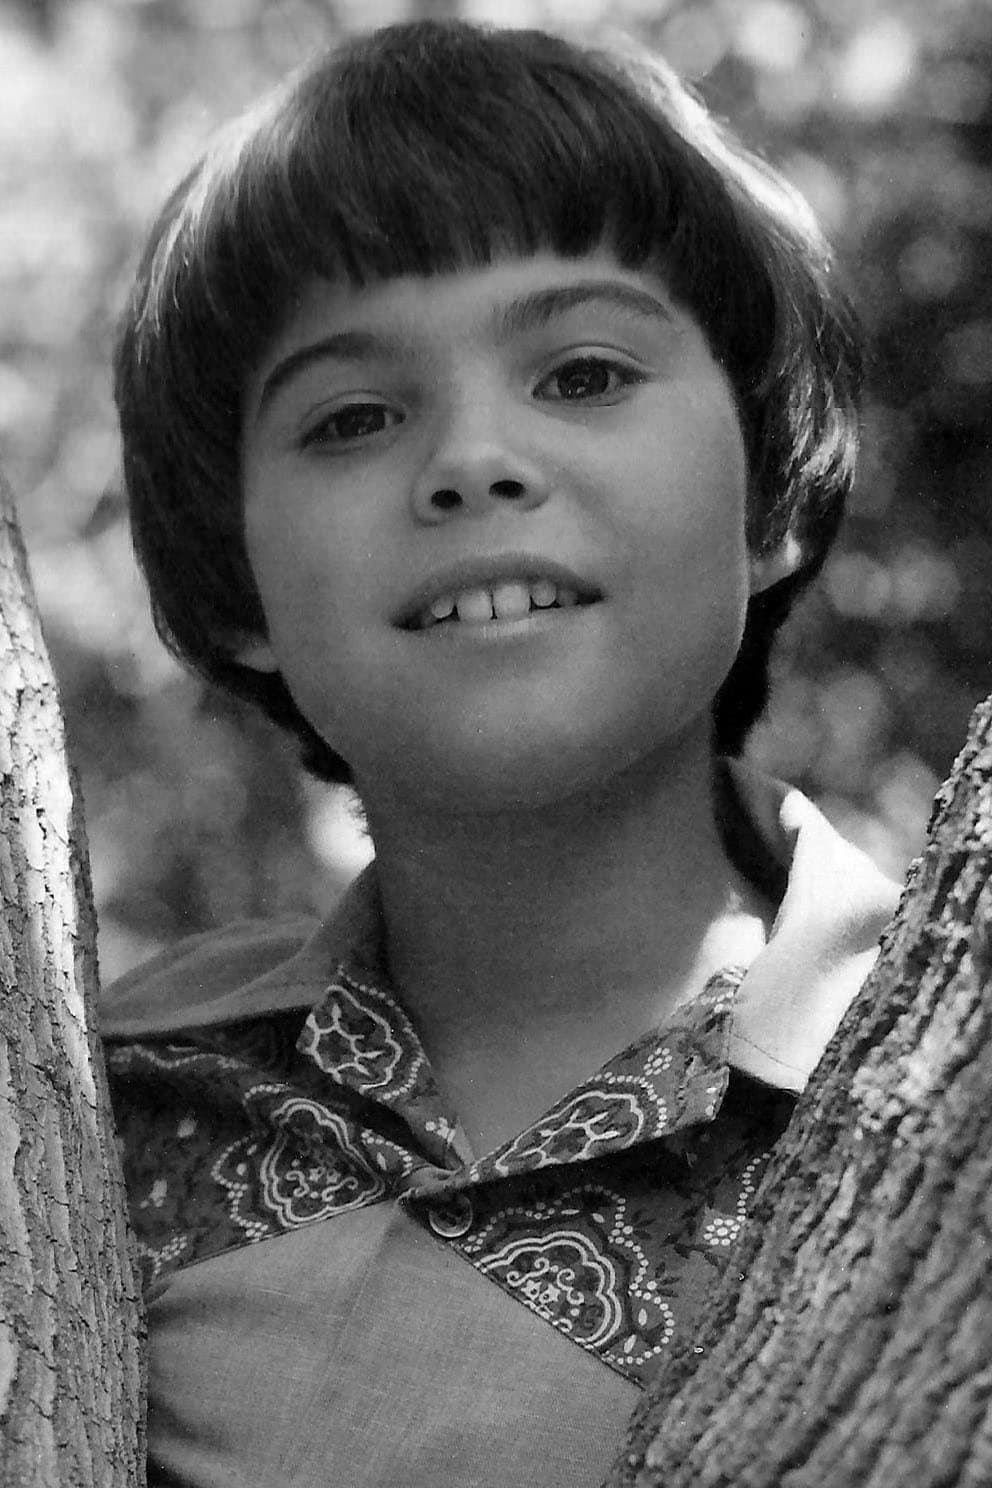 Randy Gray | Elvis as a Boy